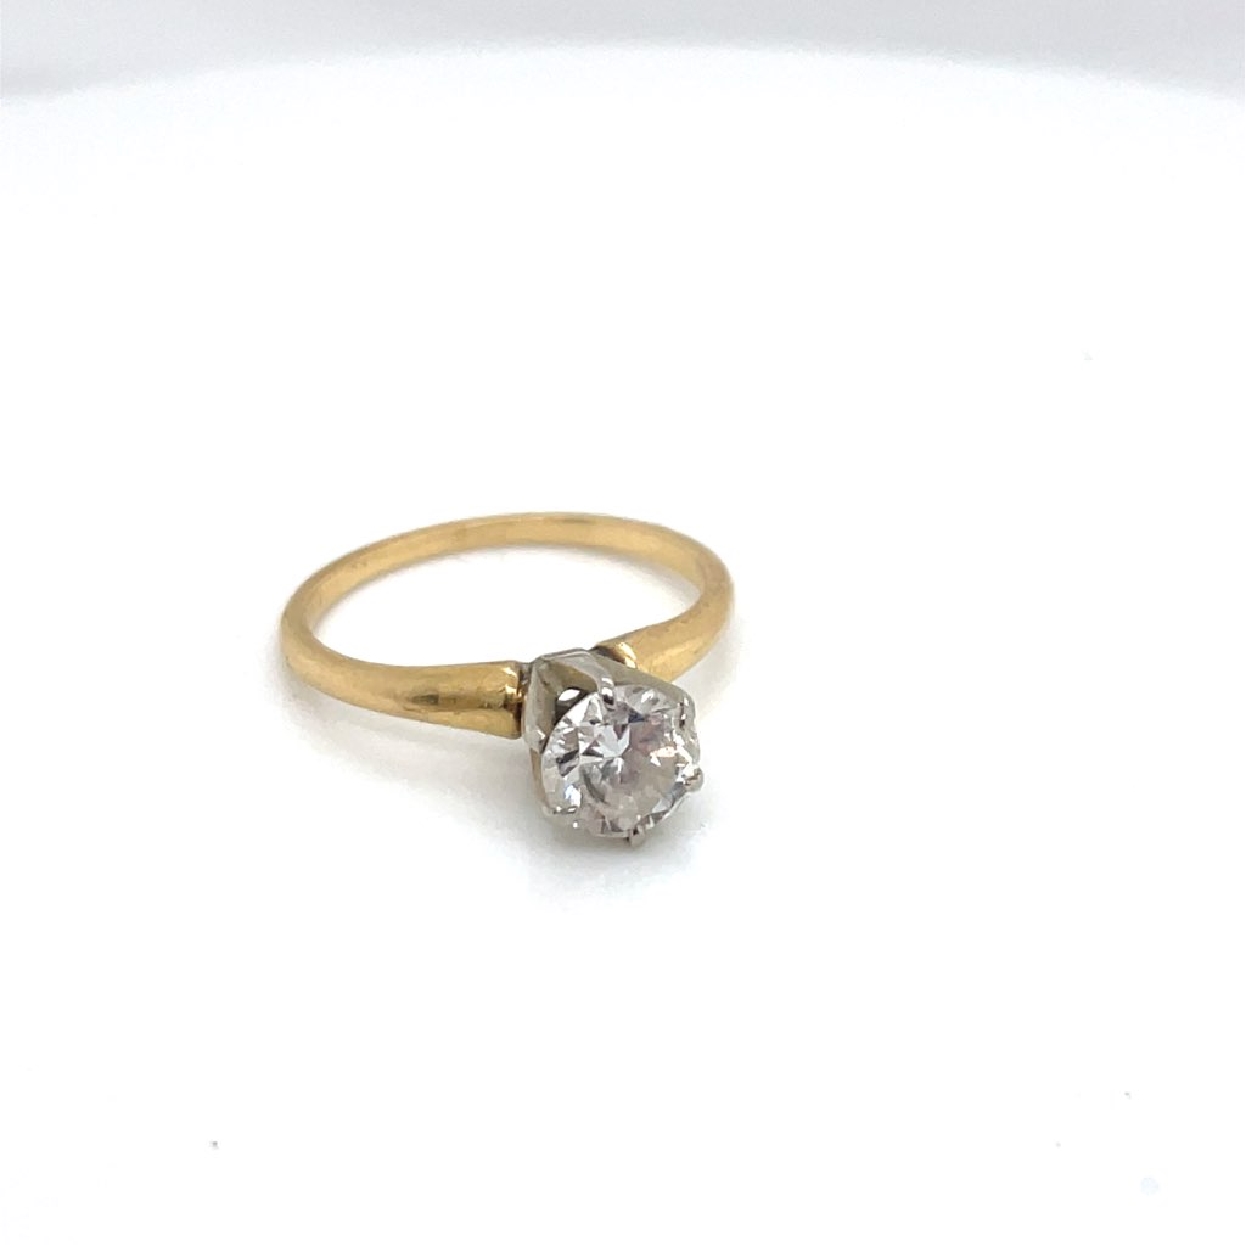 18K Two Tone Solitaire Diamond Ring 
Size: 5.5
.75ct Diamond